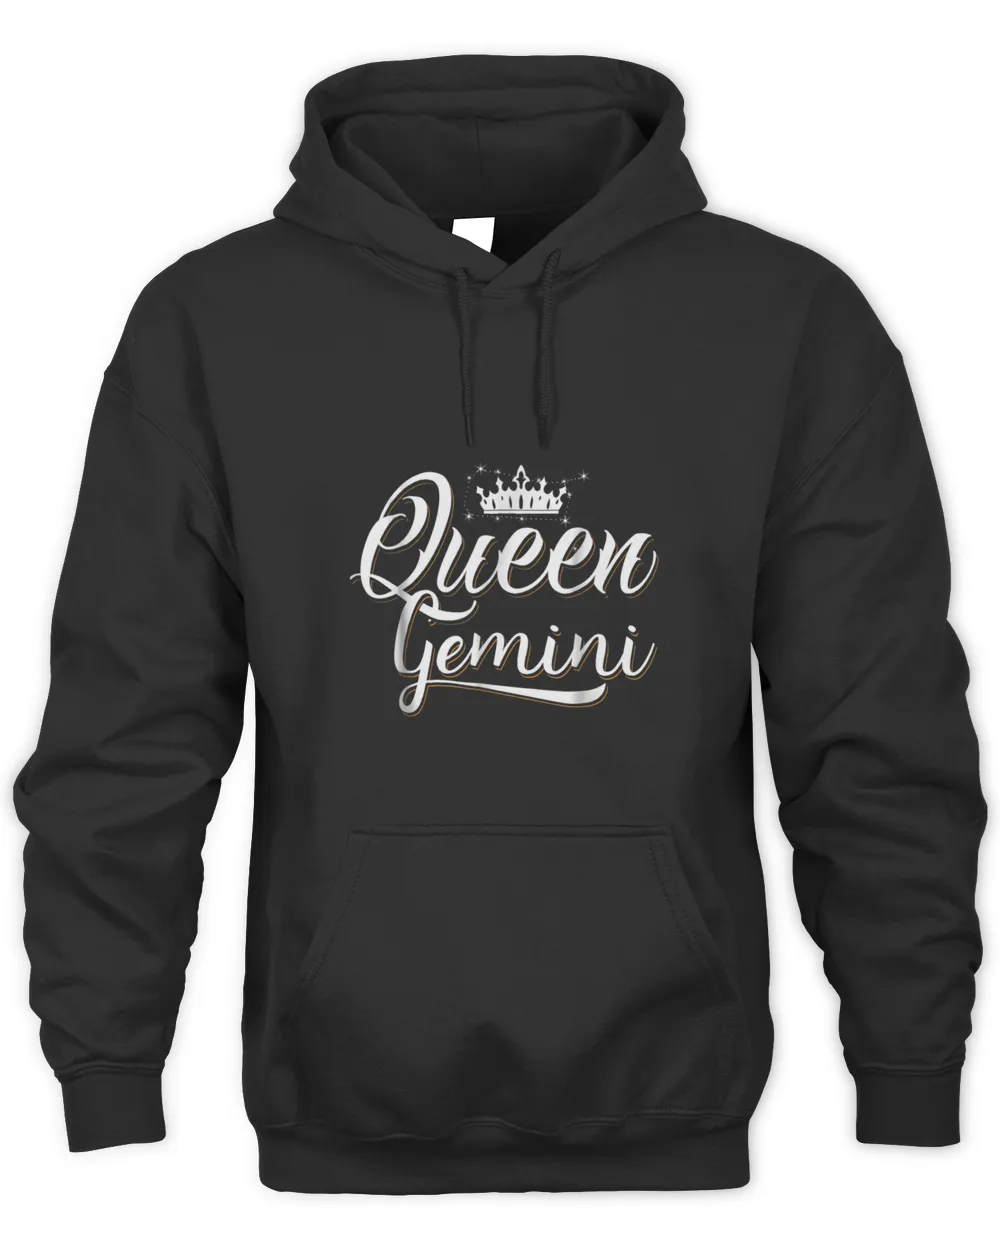 Birthday Gifts Queen Gemini